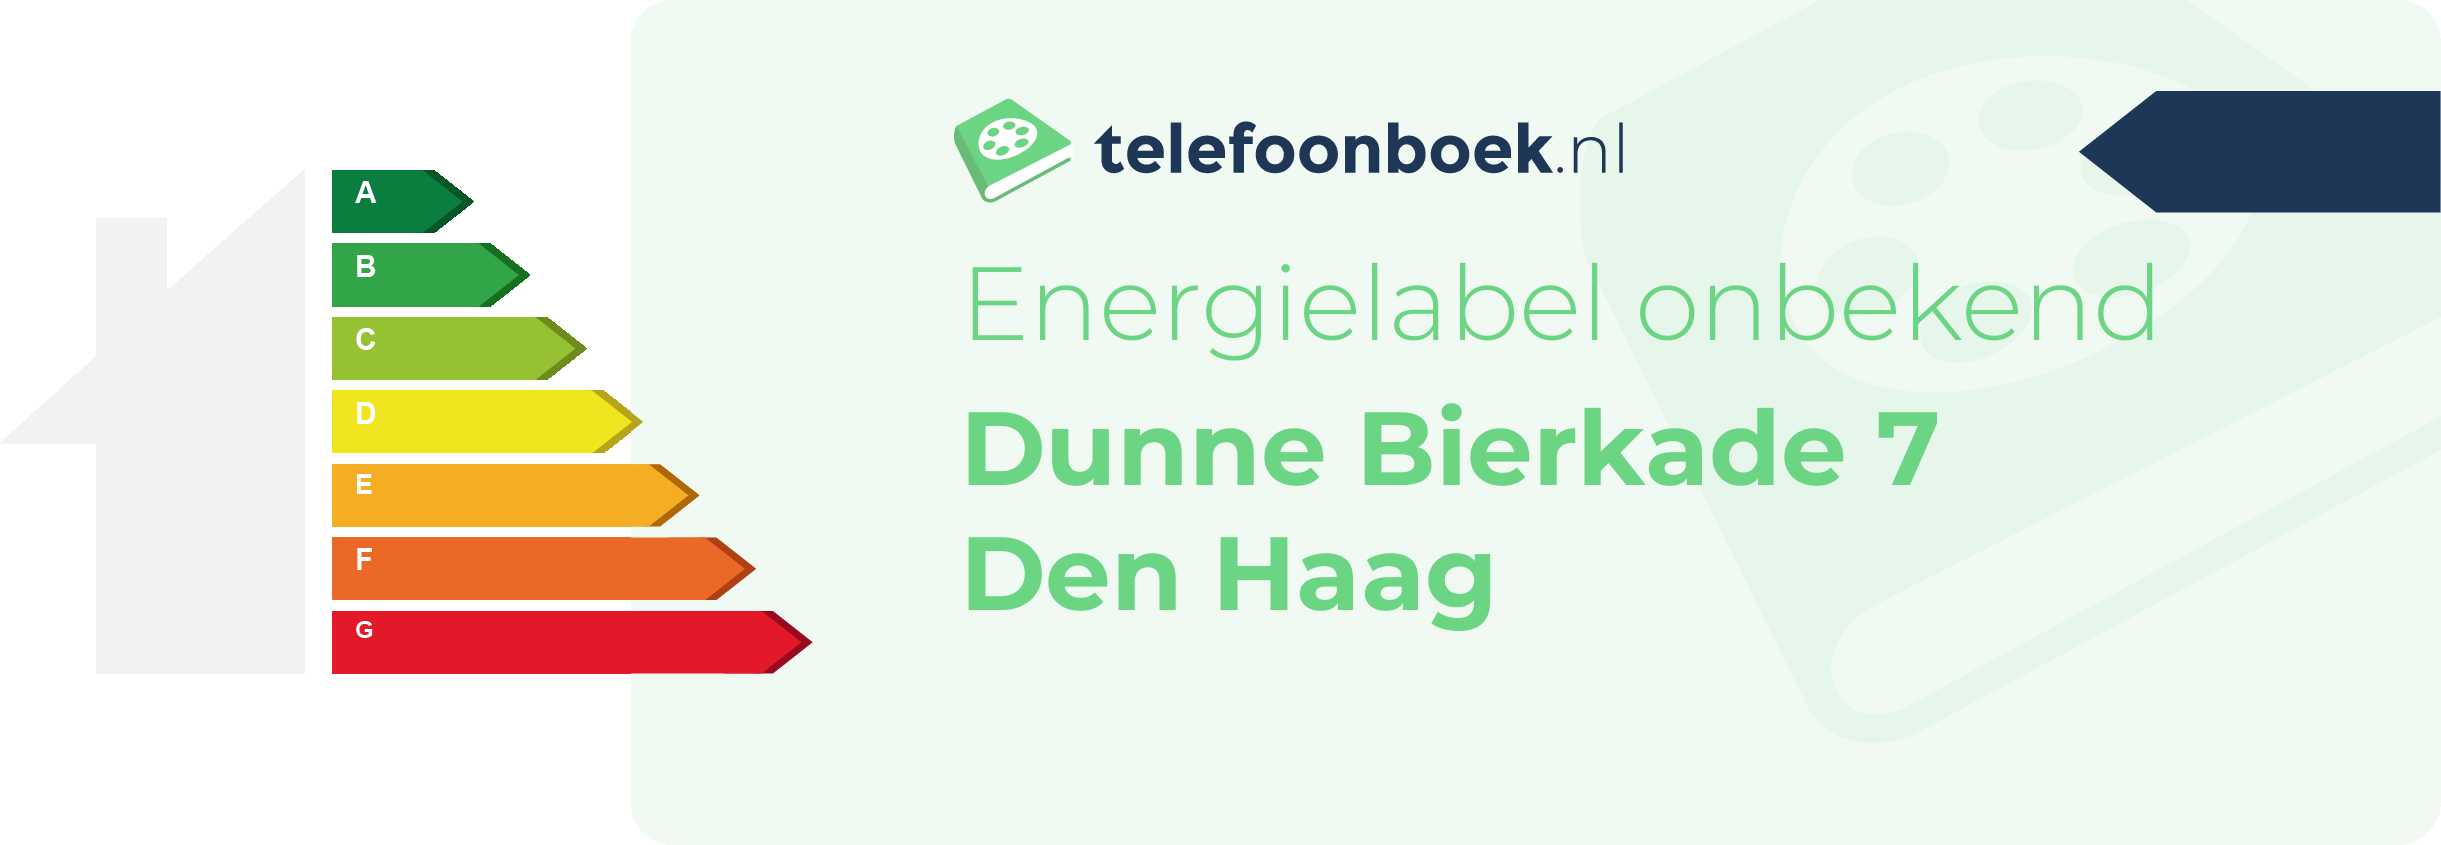 Energielabel Dunne Bierkade 7 Den Haag